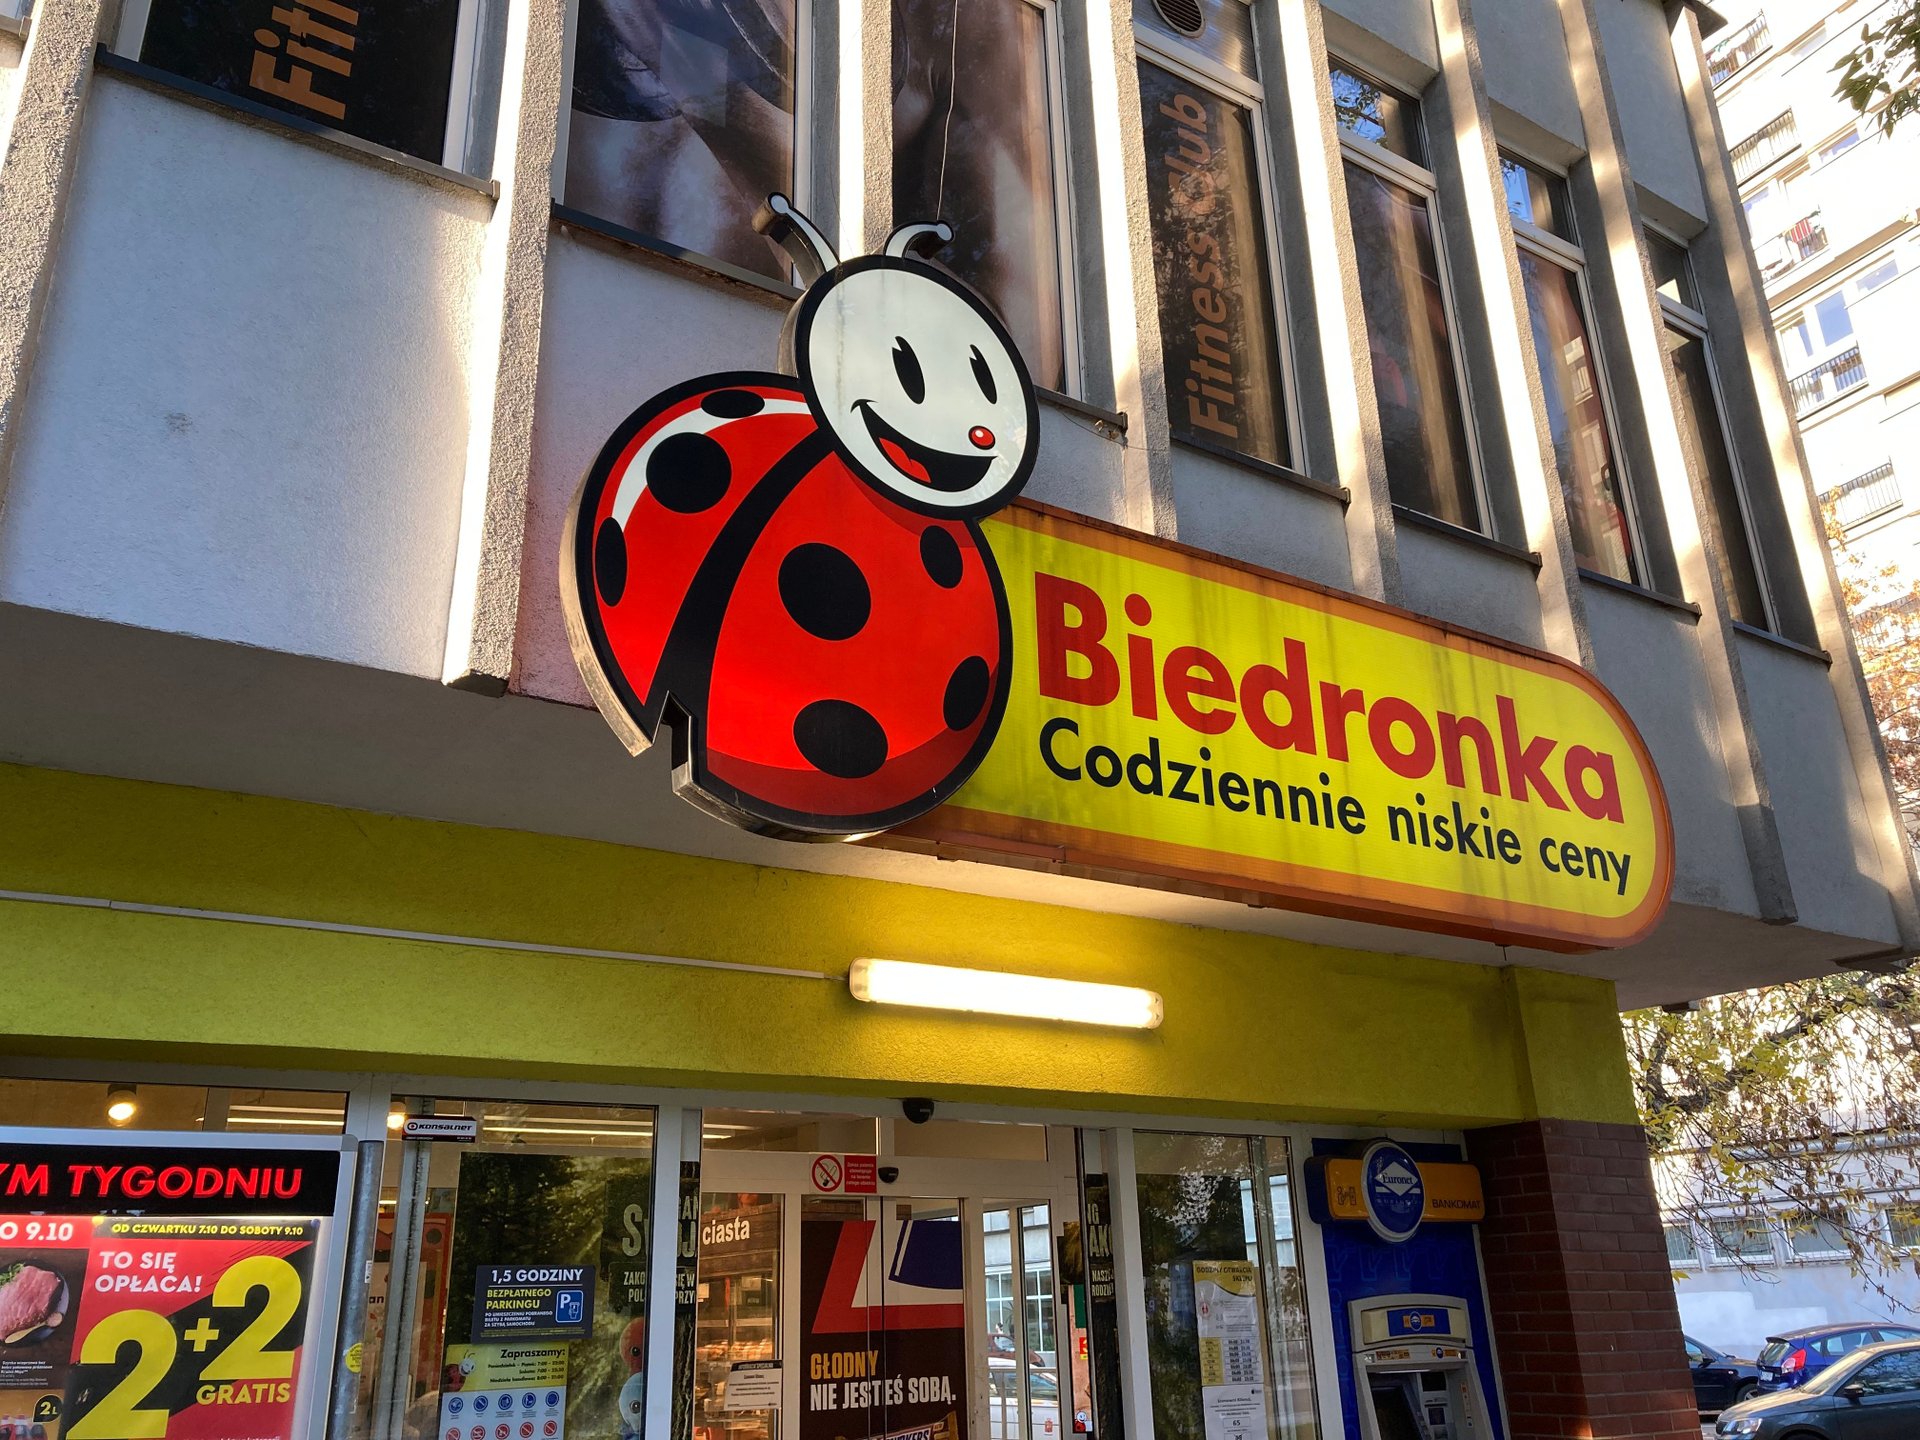 Logo Biedronka